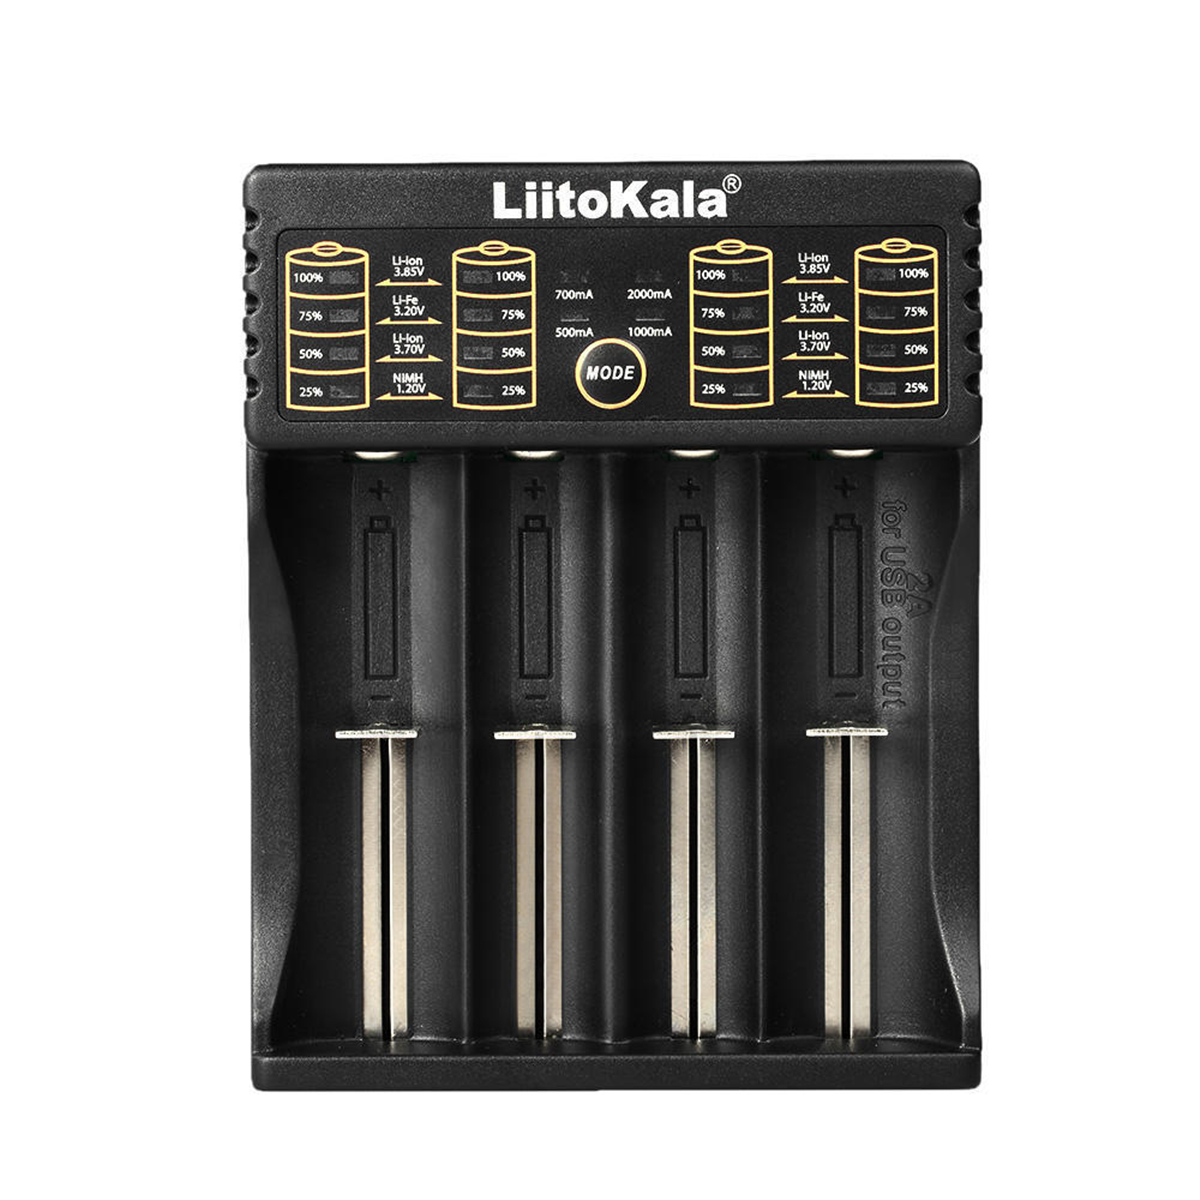 

LiitoKala 4 Port Smart Battery Charger Li Batteries Charging for lii-402 18650 26650 16340 14500 A AA AAA 21700 RCR123 S